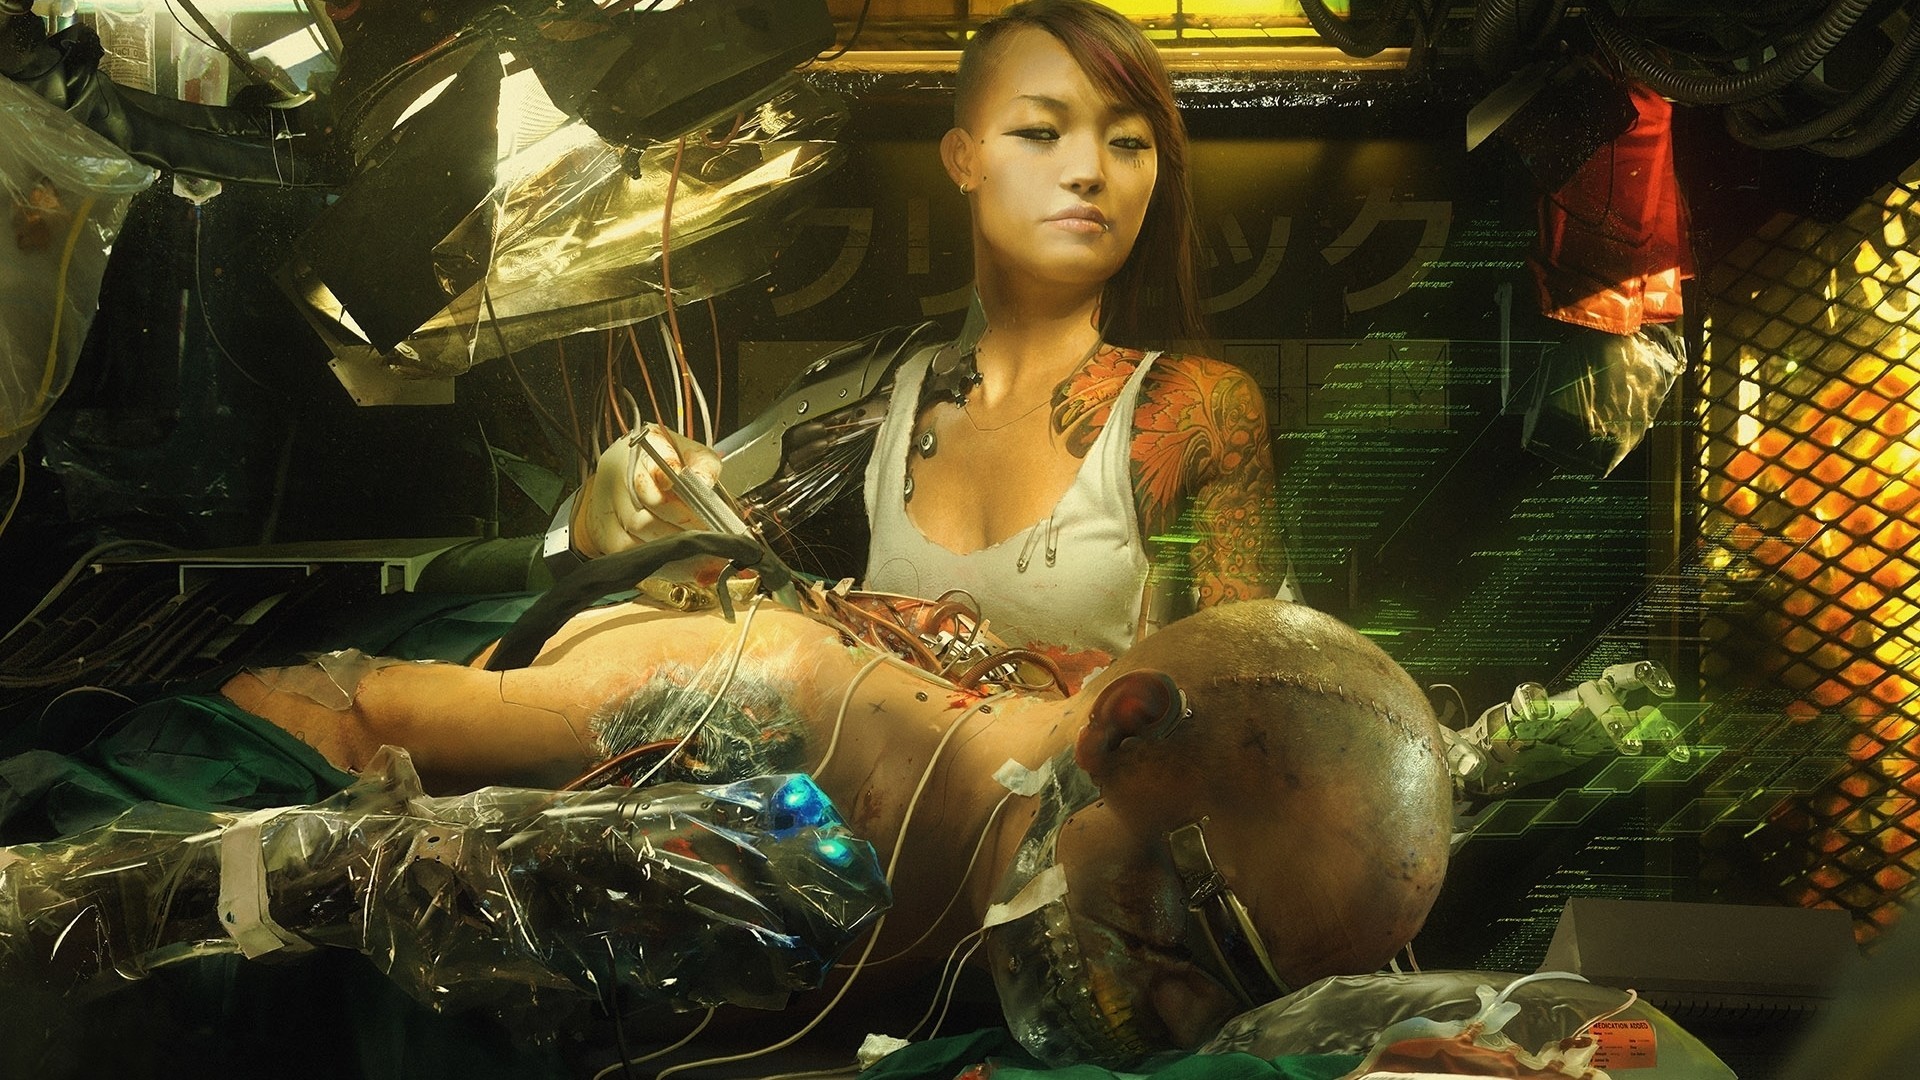 Artwork Fantasy Art Cyborg Women Doctors Cyberpunk 1920x1080